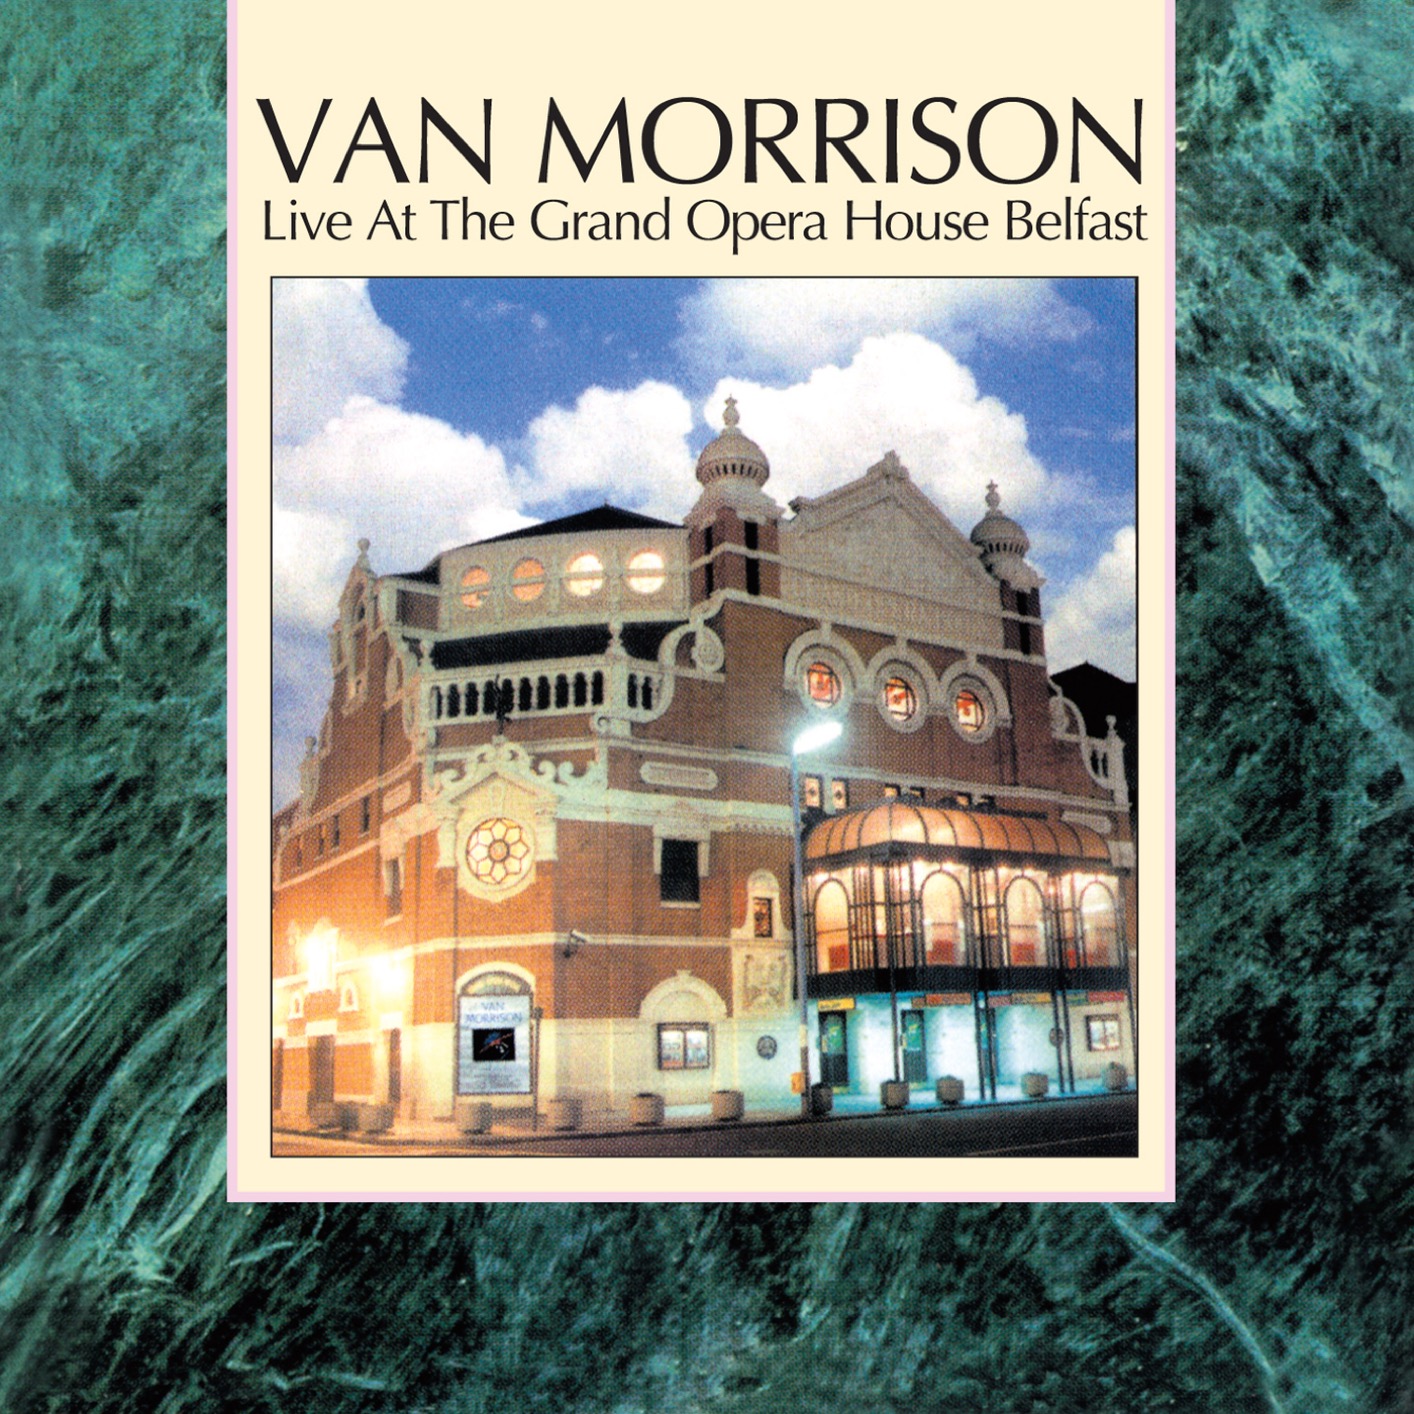 Van Morrison - Live at the Grand Opera House Belfast (Remastered) (1984/2020) [FLAC 24bit/96kHz]